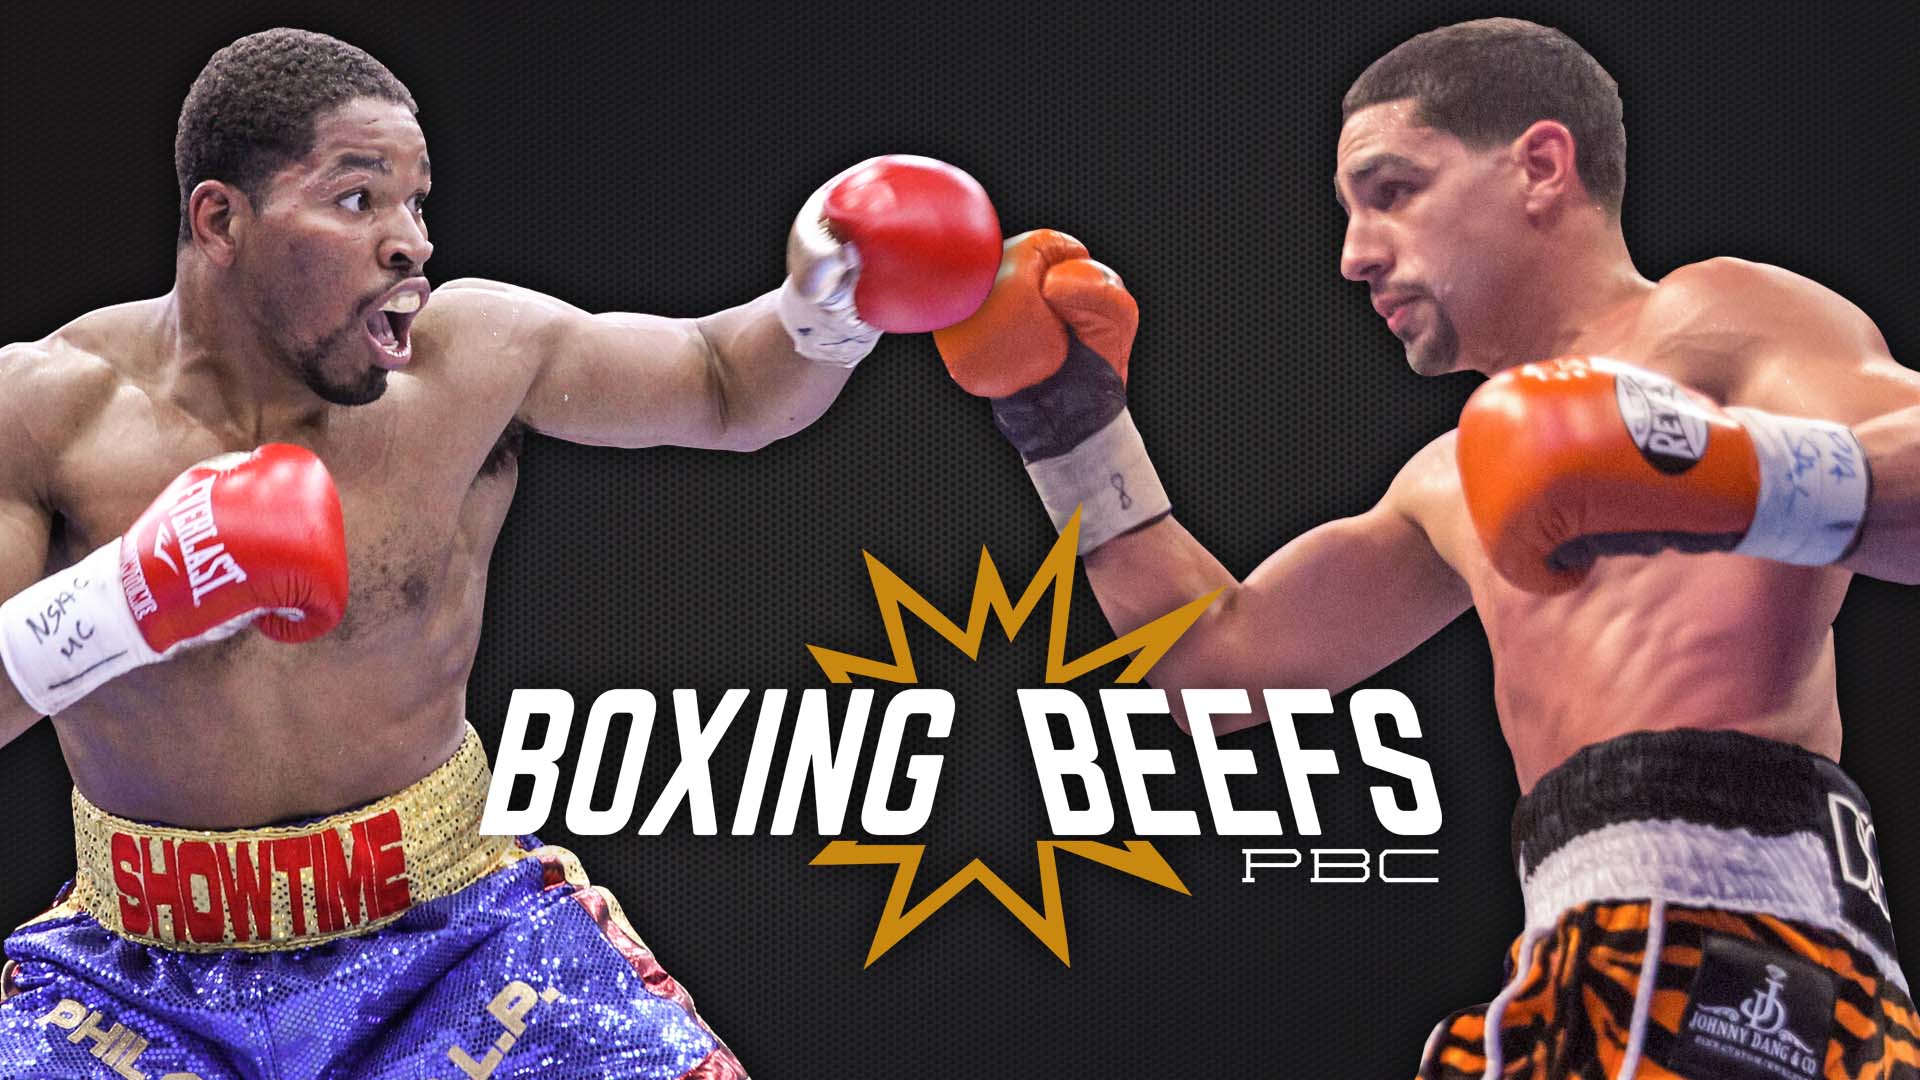 PBC Boxing Beefs: Shawn Porter vs Danny Garcia